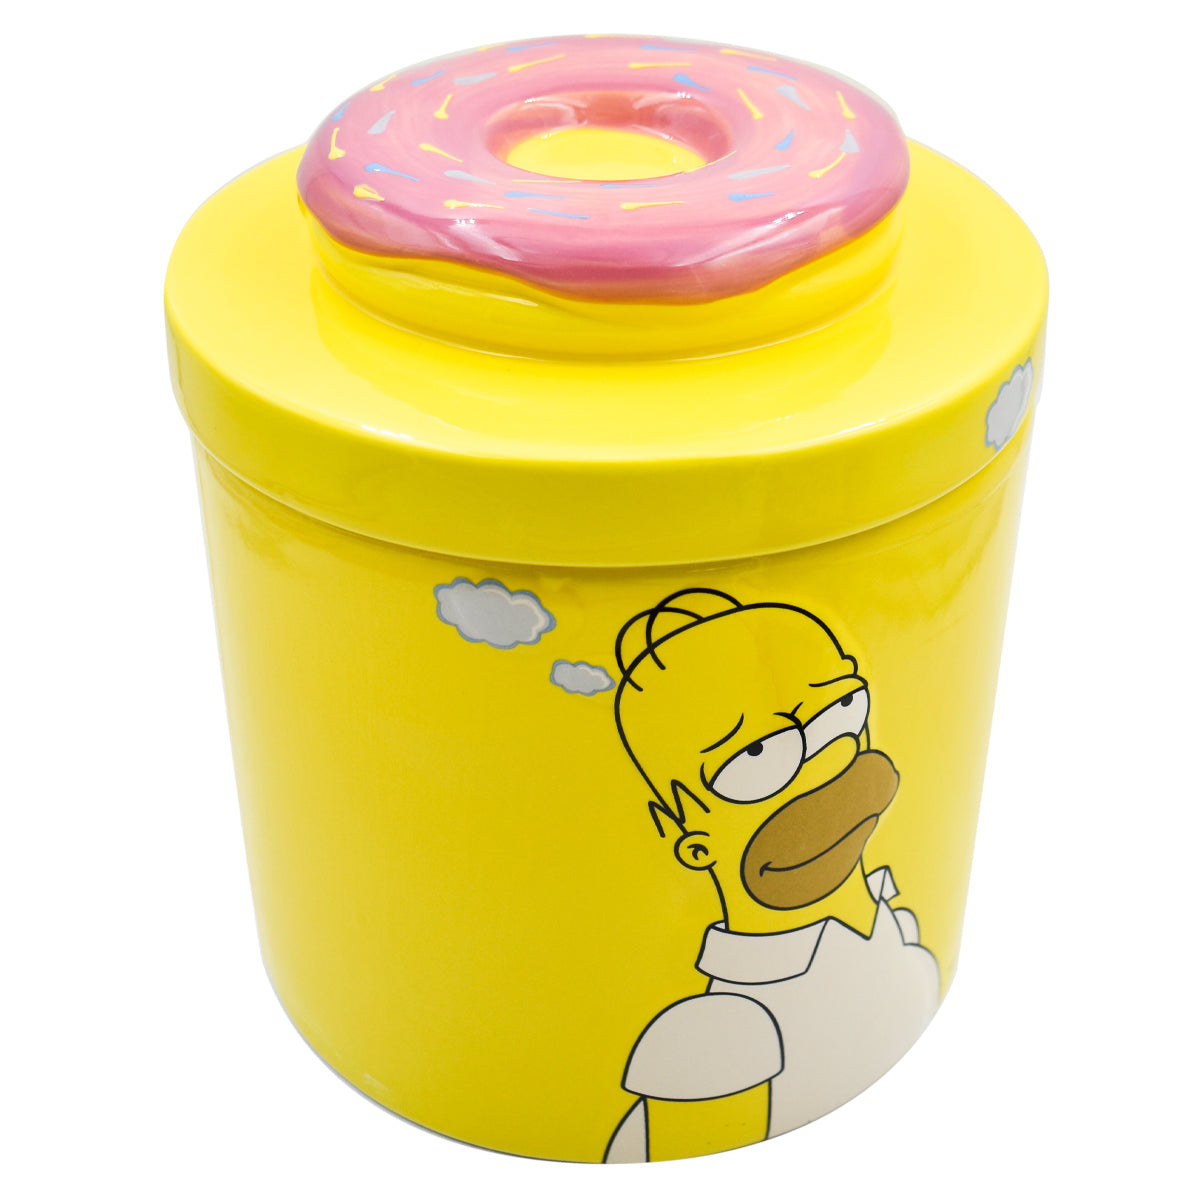 Frasco Galletero Hermetico Grande Fun Kids Disney Los Simpson Homero Ceramica 3.250L